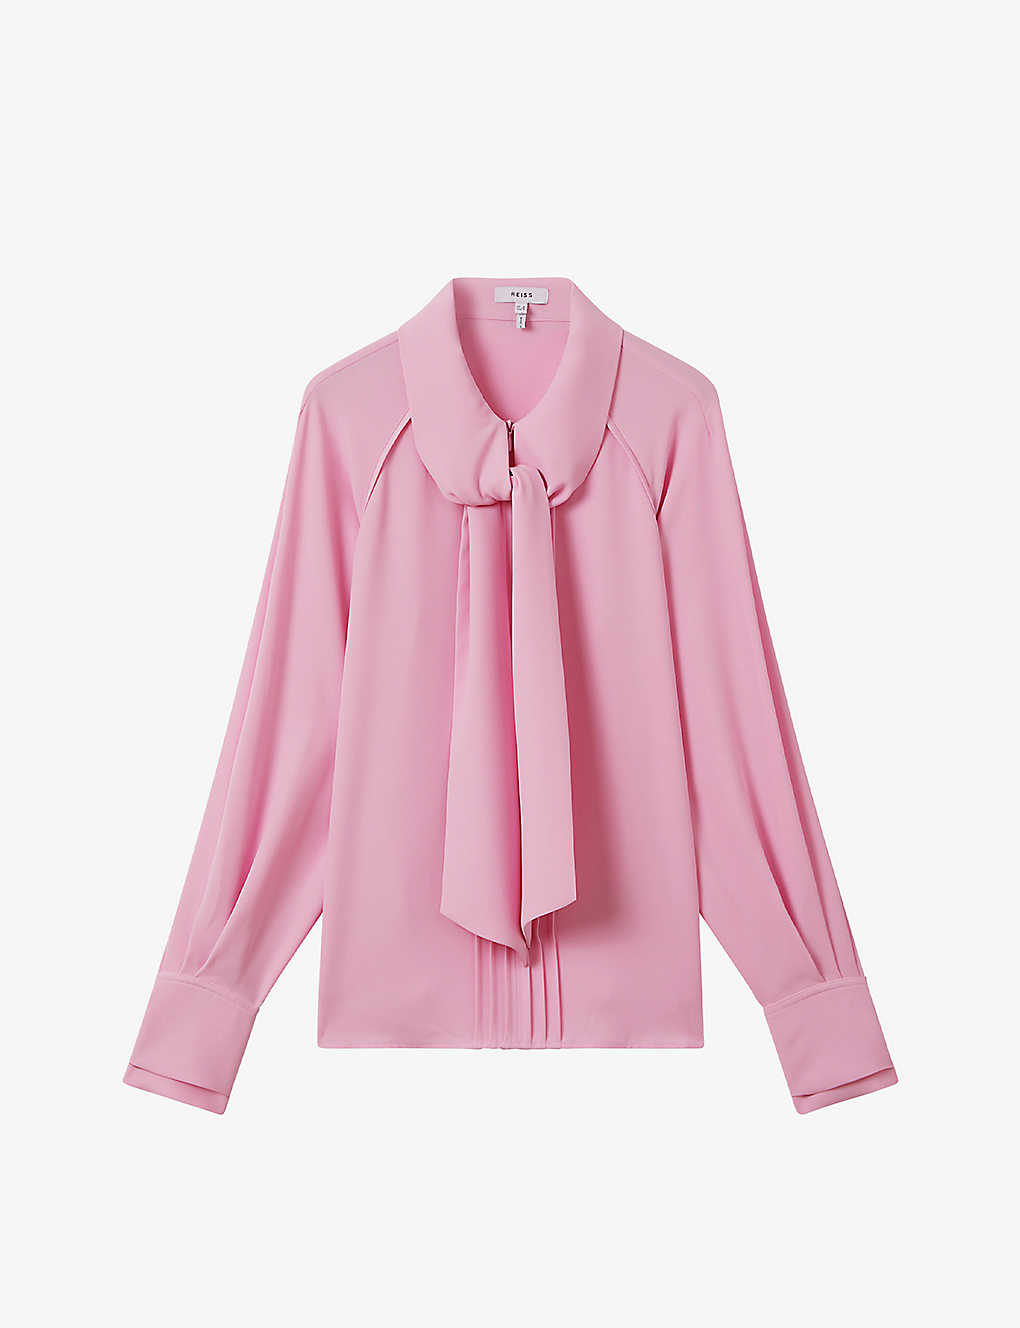 Shop Reiss Women's Pink Ella Tie-neck Woven Blouse